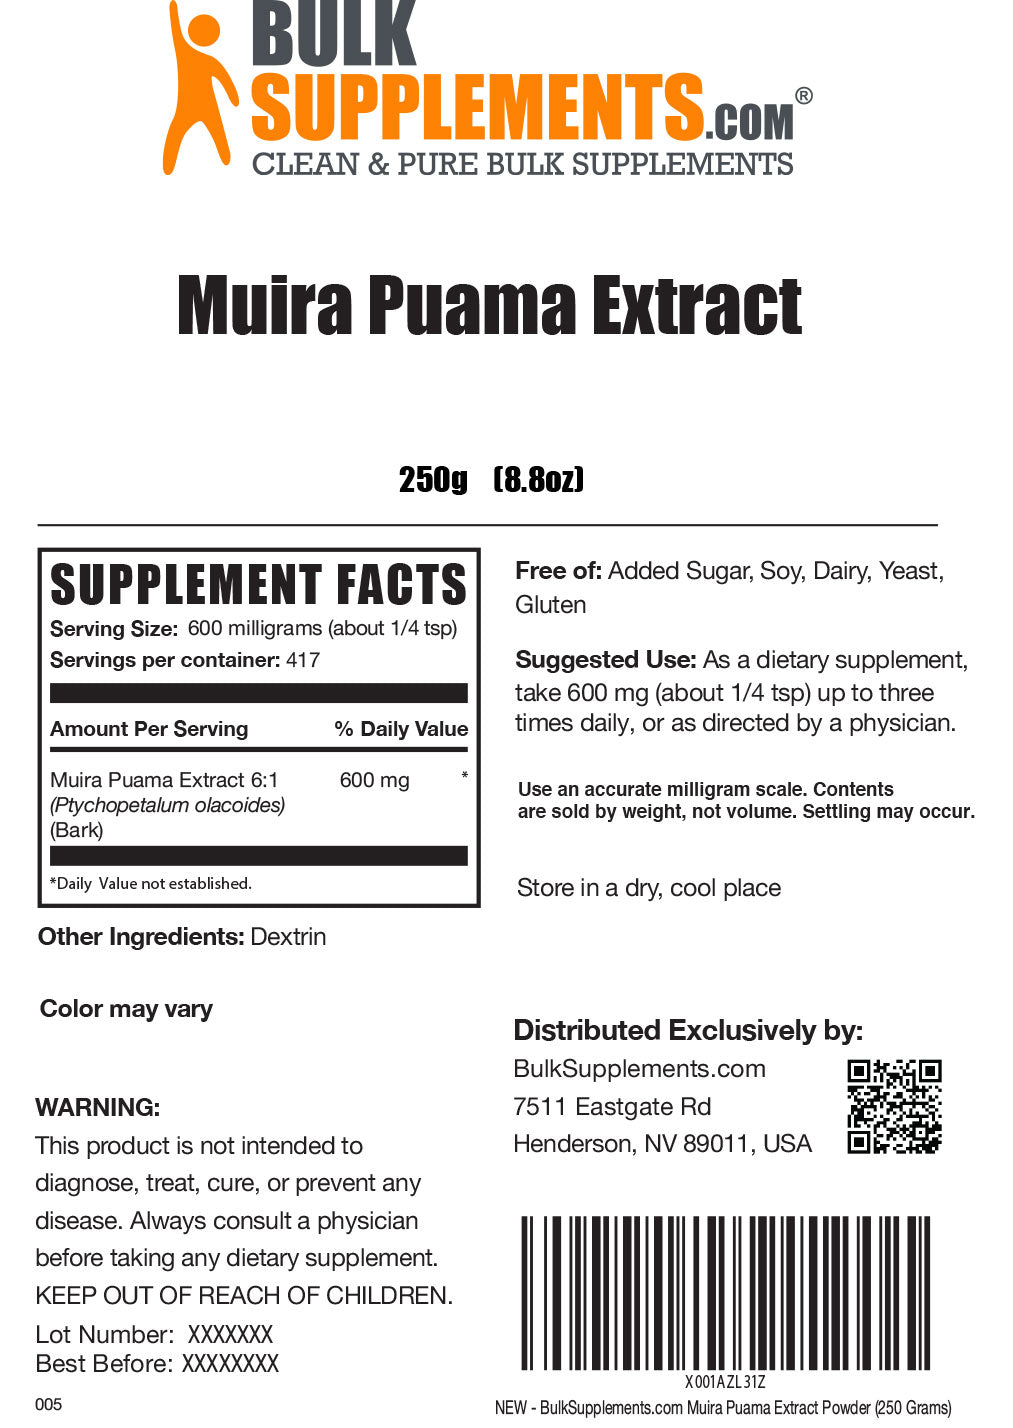 Muira Puama Extract powder label 250g